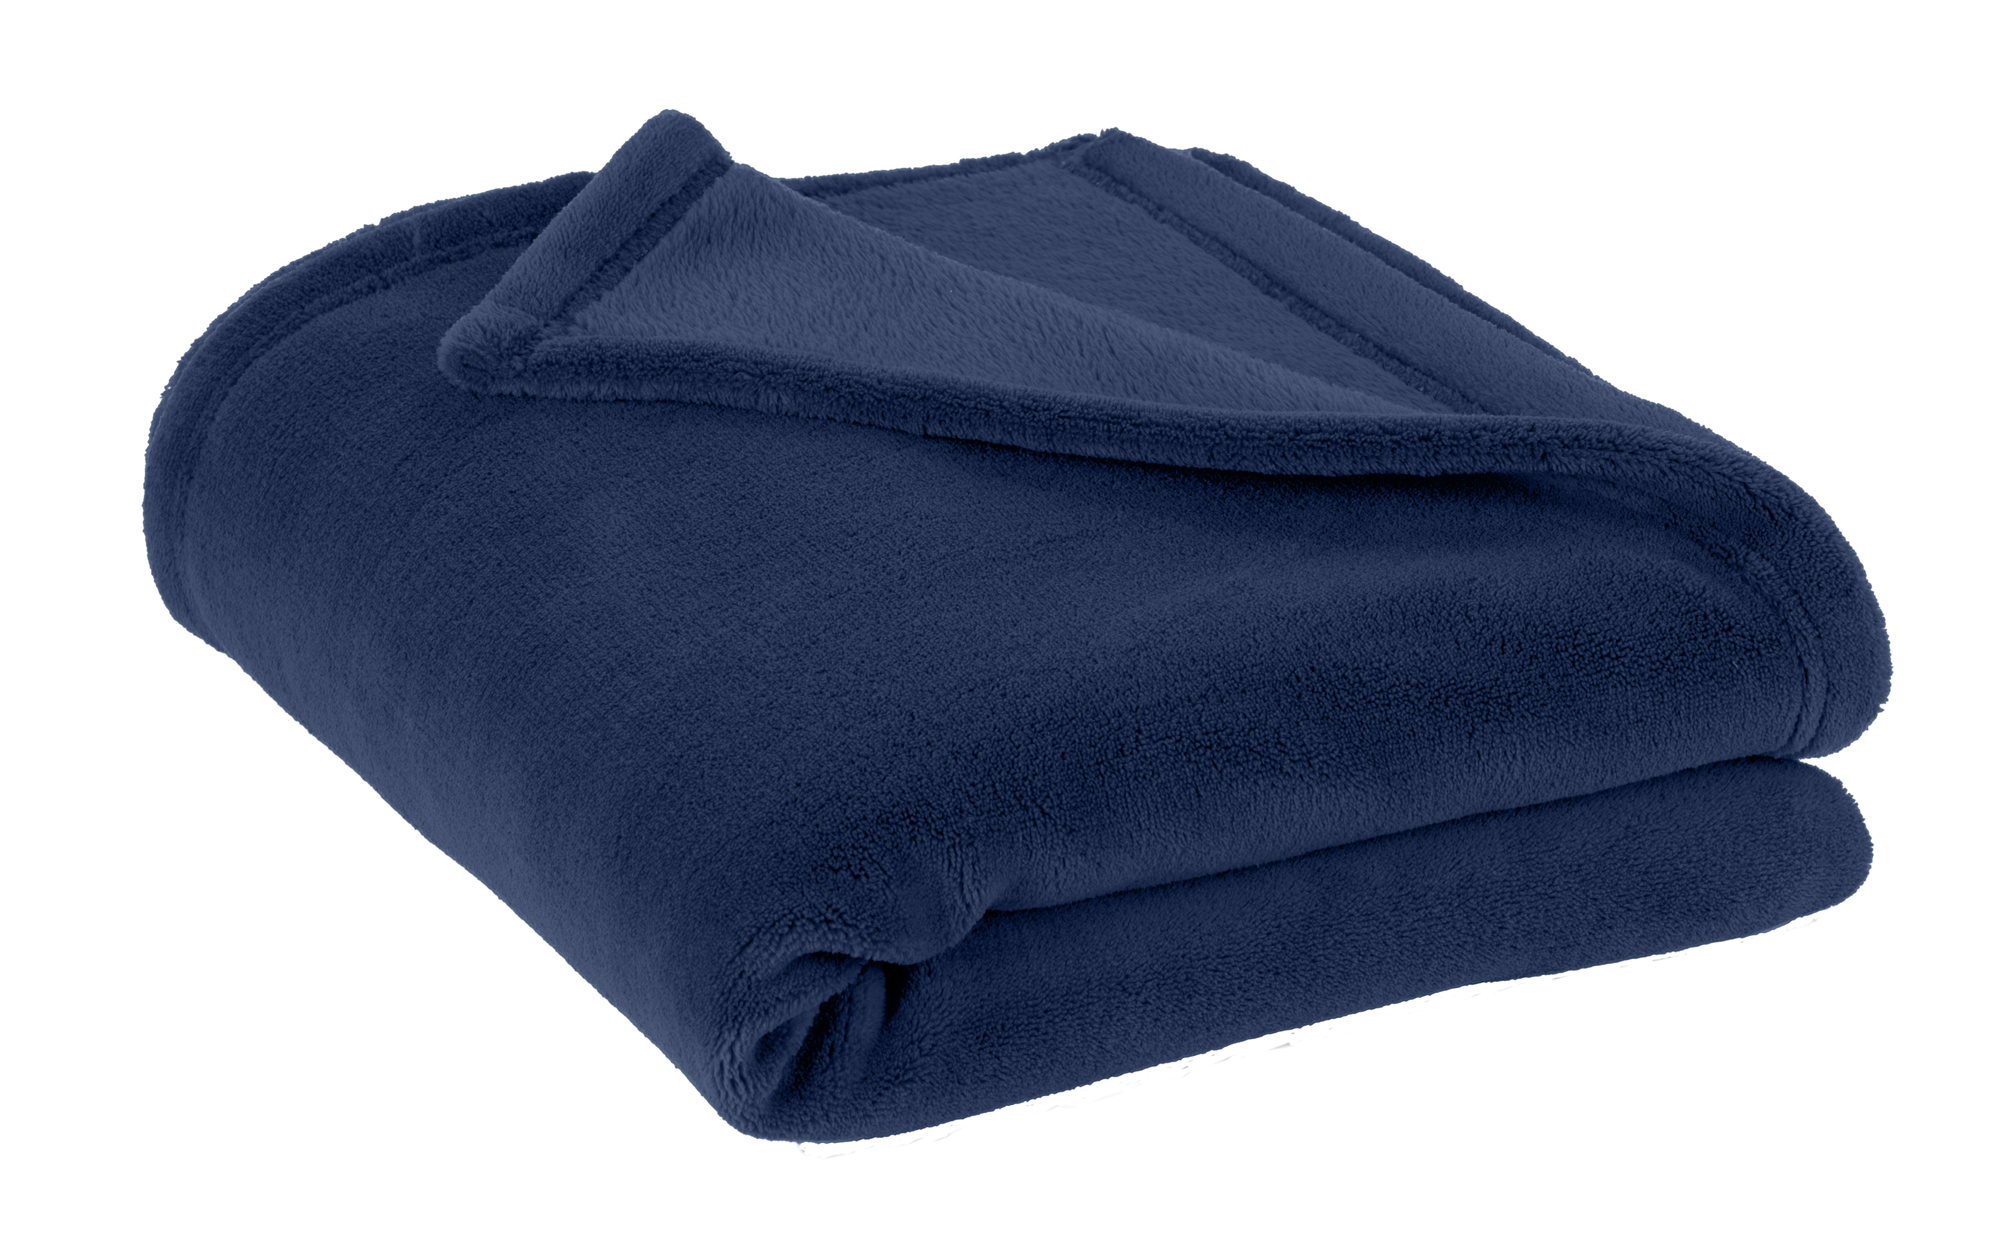 Trapp Plush Blanket | Trapp Technology